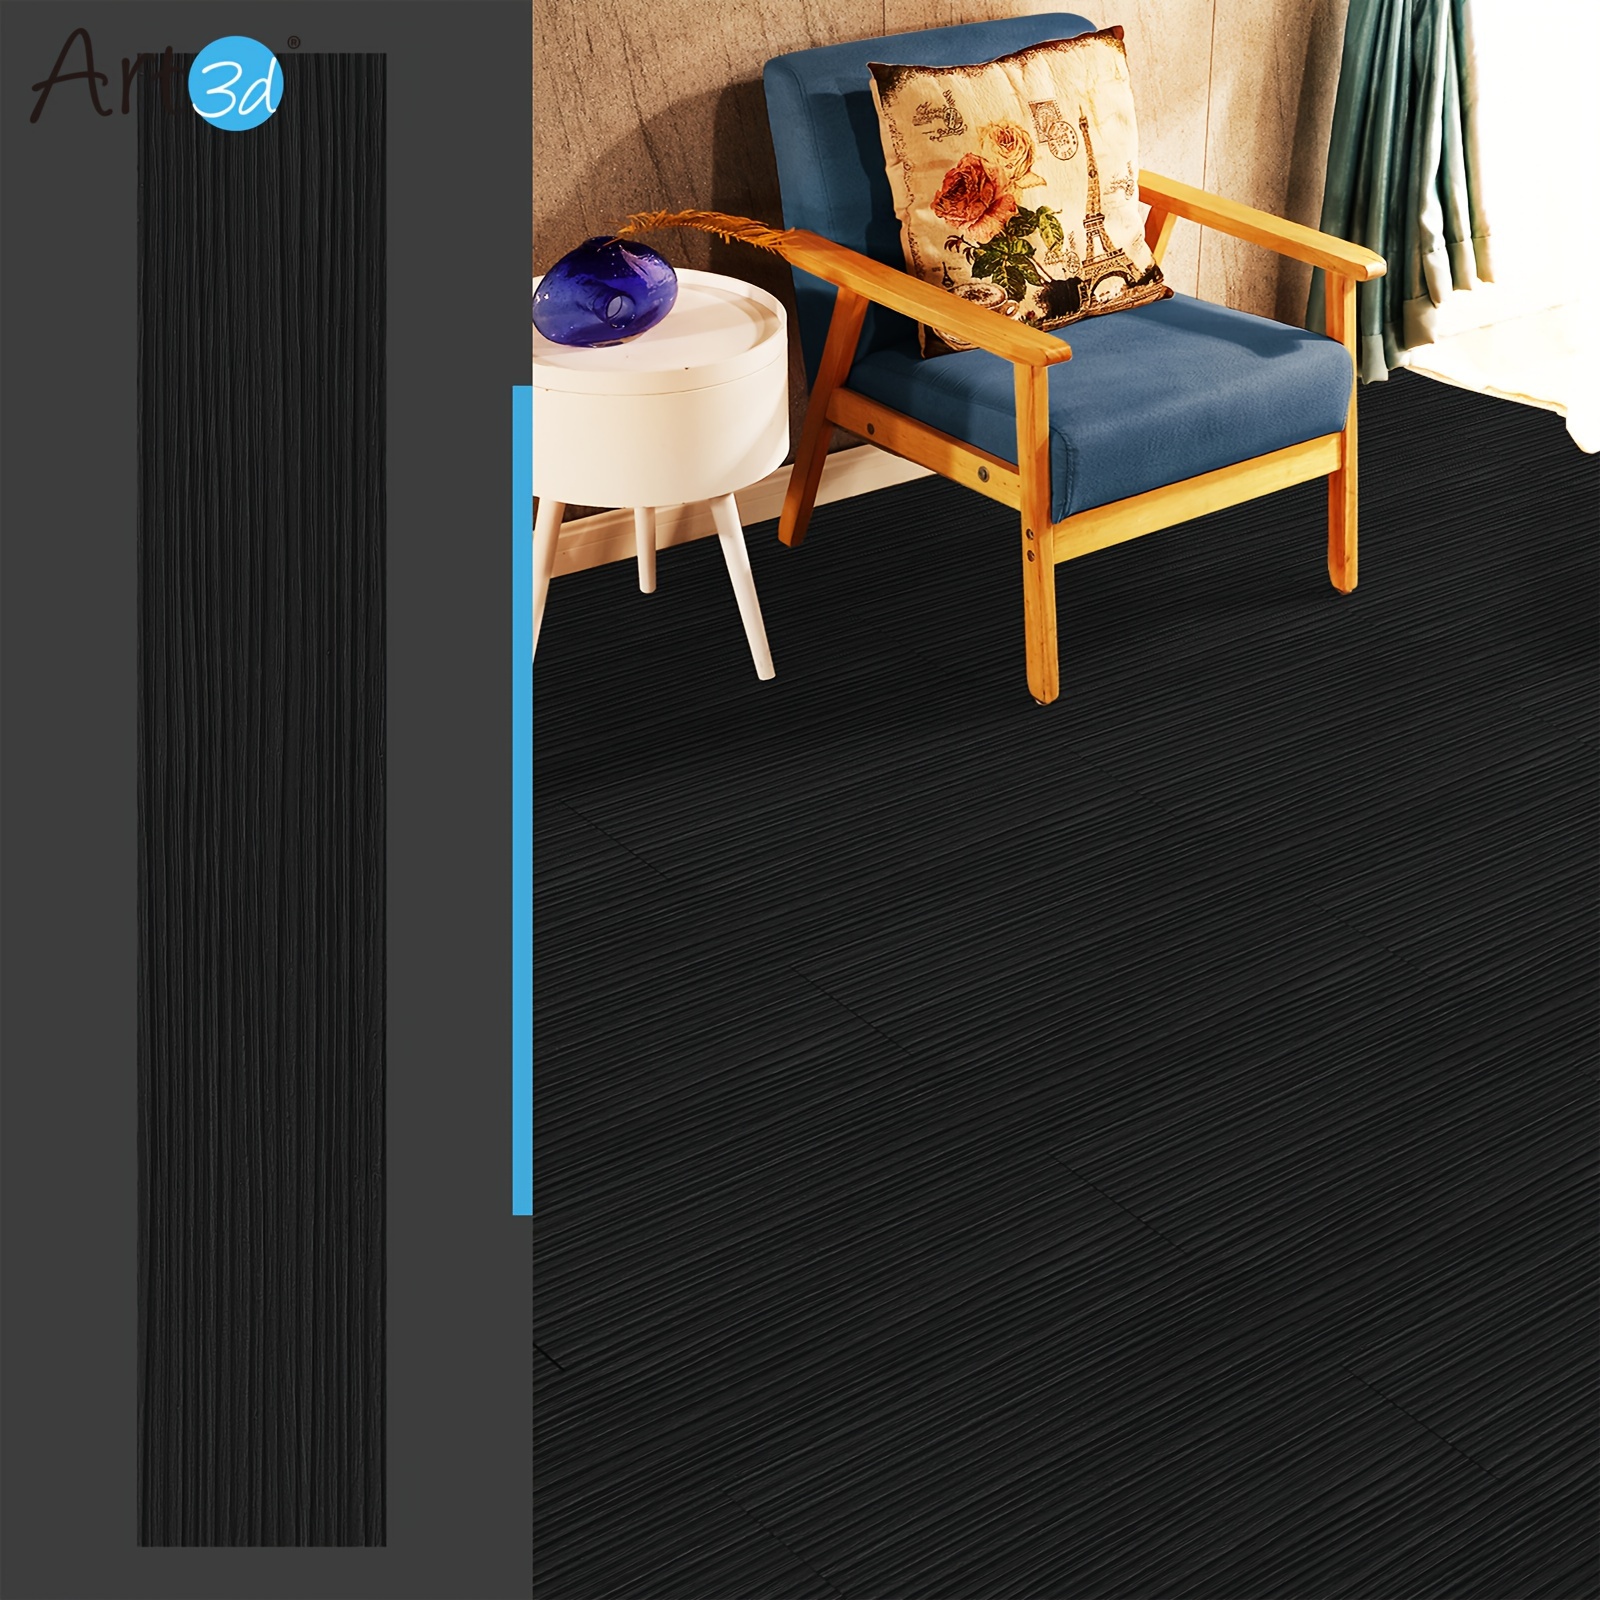 

Art3d 36-pack Self-adhesive Flooring Tiles, 36" X 6" X 0.06" Luxury Vinyl Plank In Black, 54 Sq.ft/case